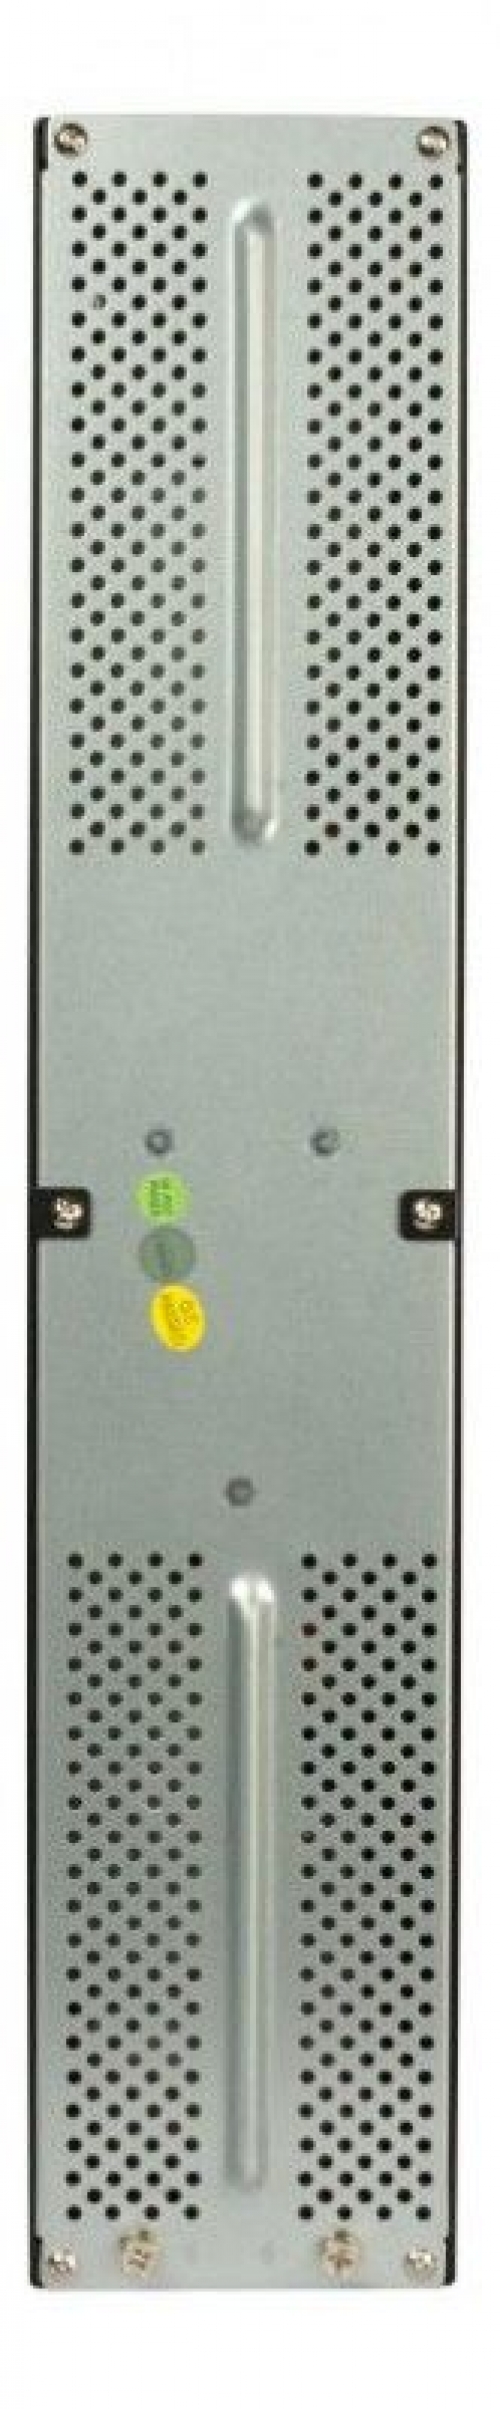 Батарея для ИБП Ippon Innova RT 3K 2U (626116)